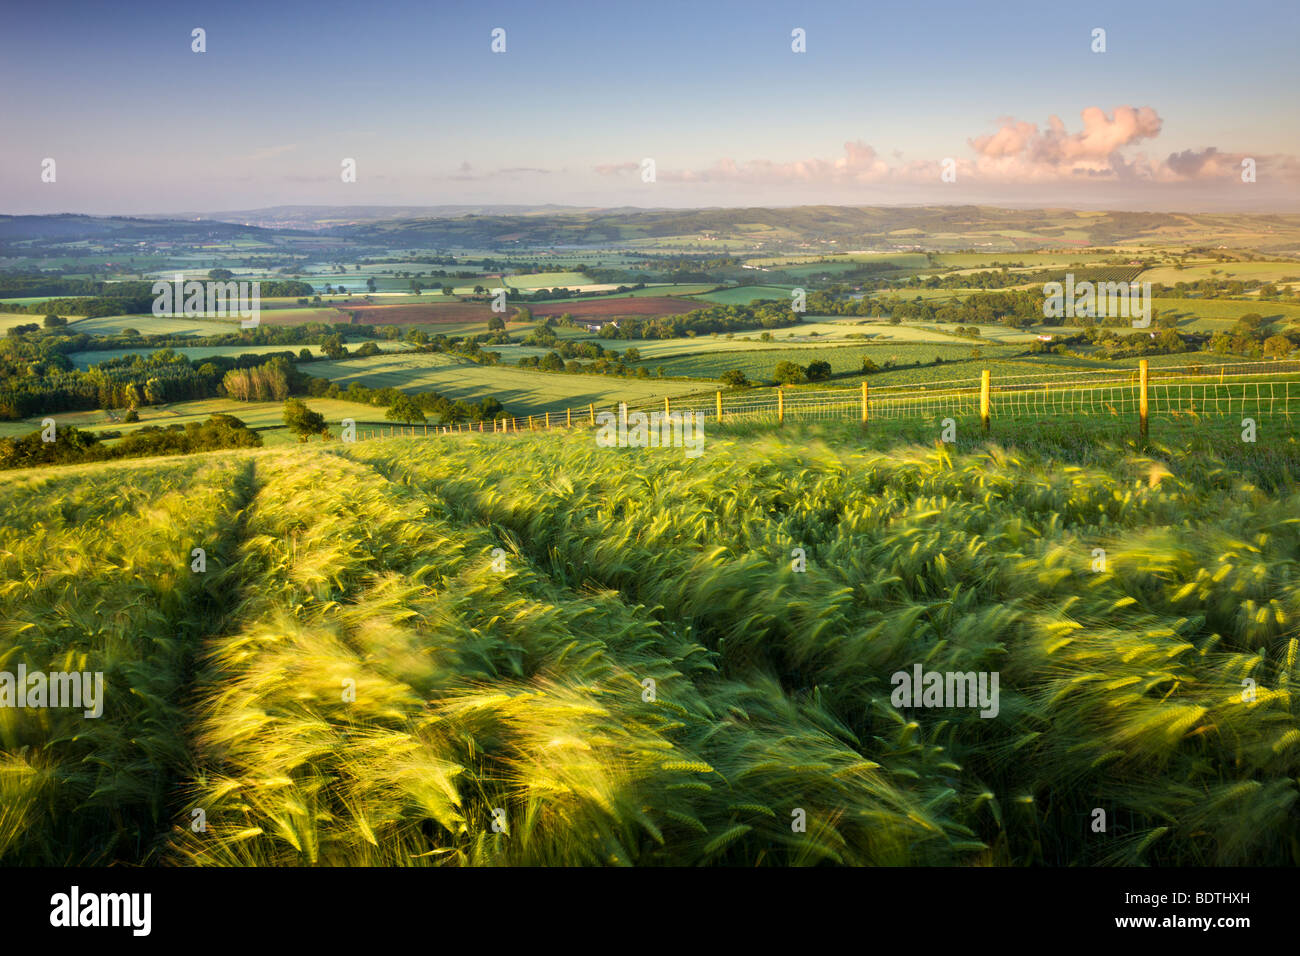 Golden ripened barley growing in a hilltop field in rural Devon, England. Summer (June) 2009 Stock Photo